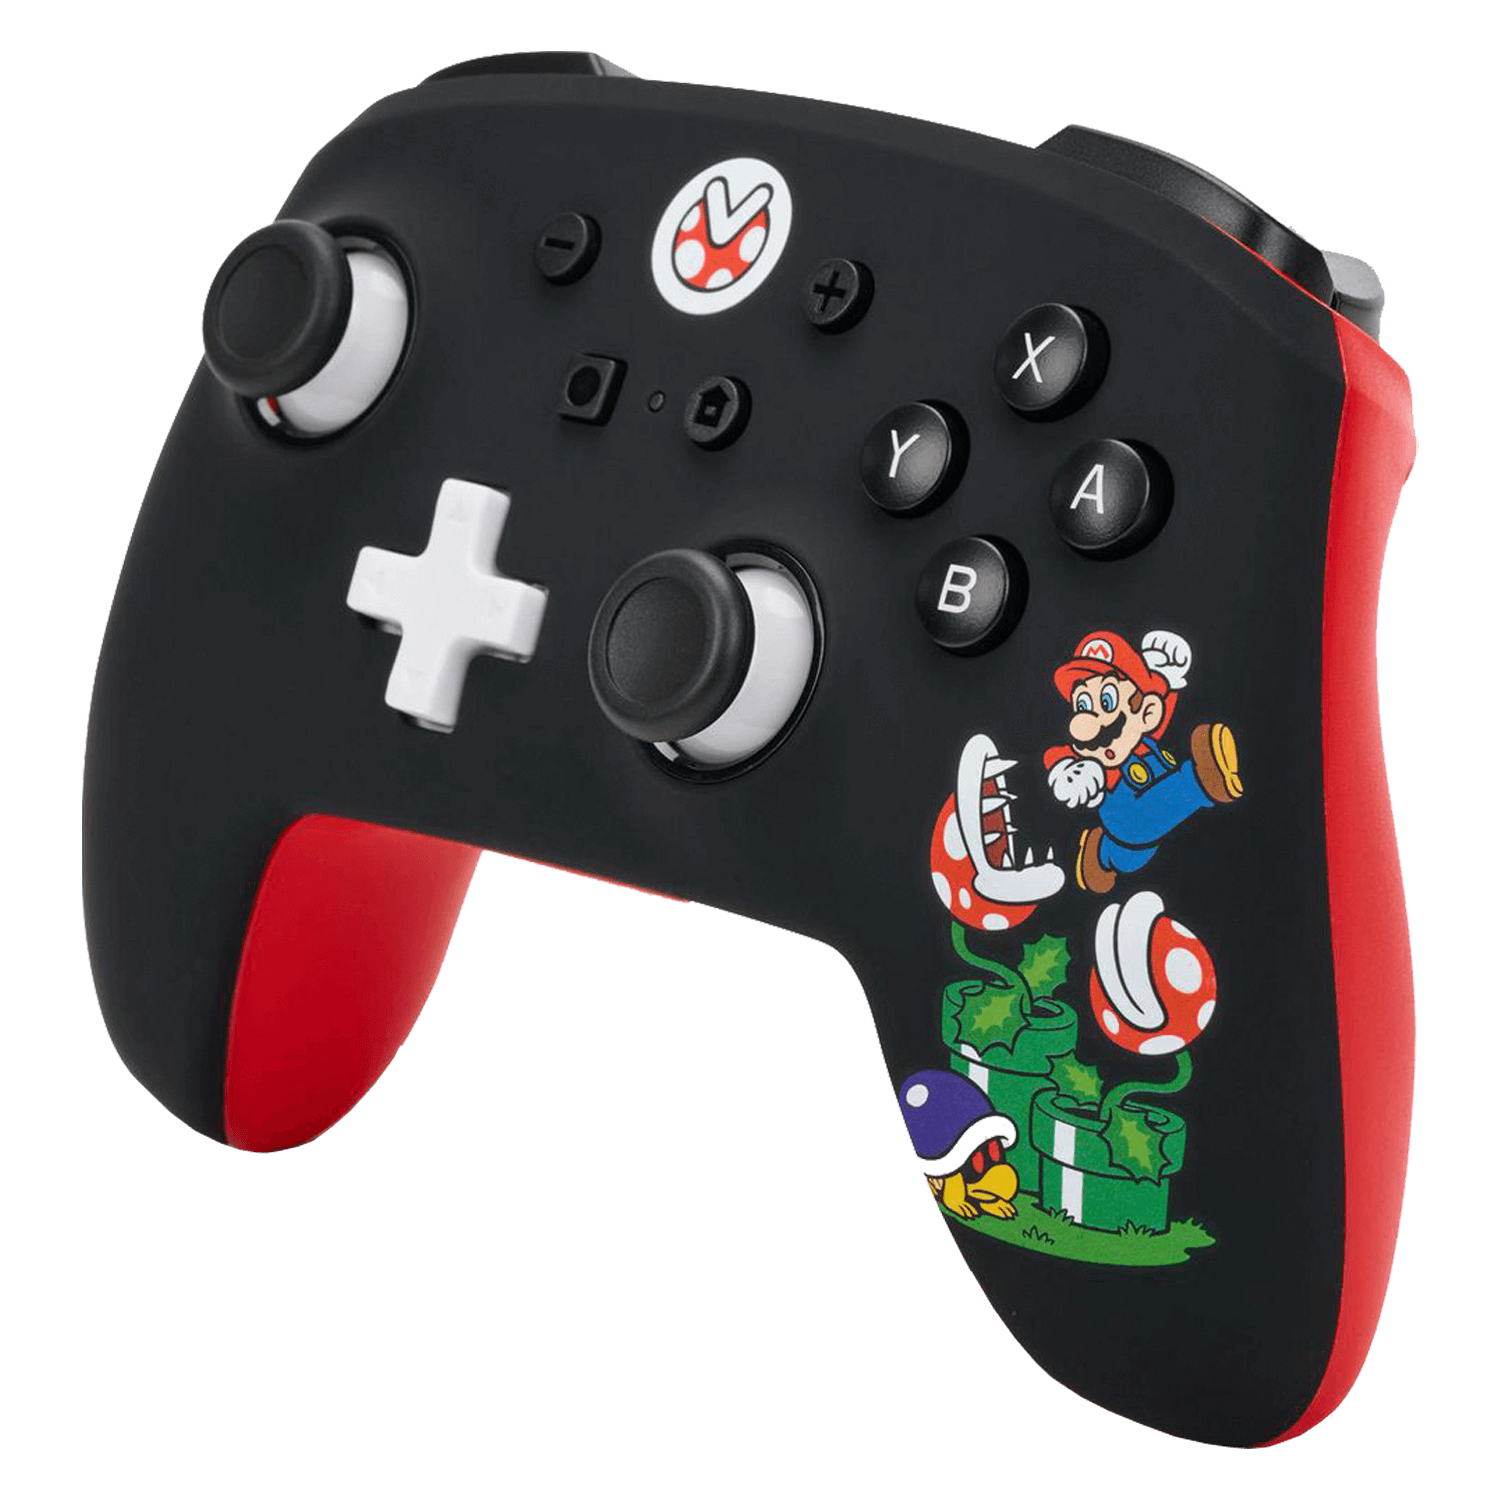 Controle PowerA Enhanced Wireless para Nintendo Switch - Mario Mayhem (PWA-A-02776)
